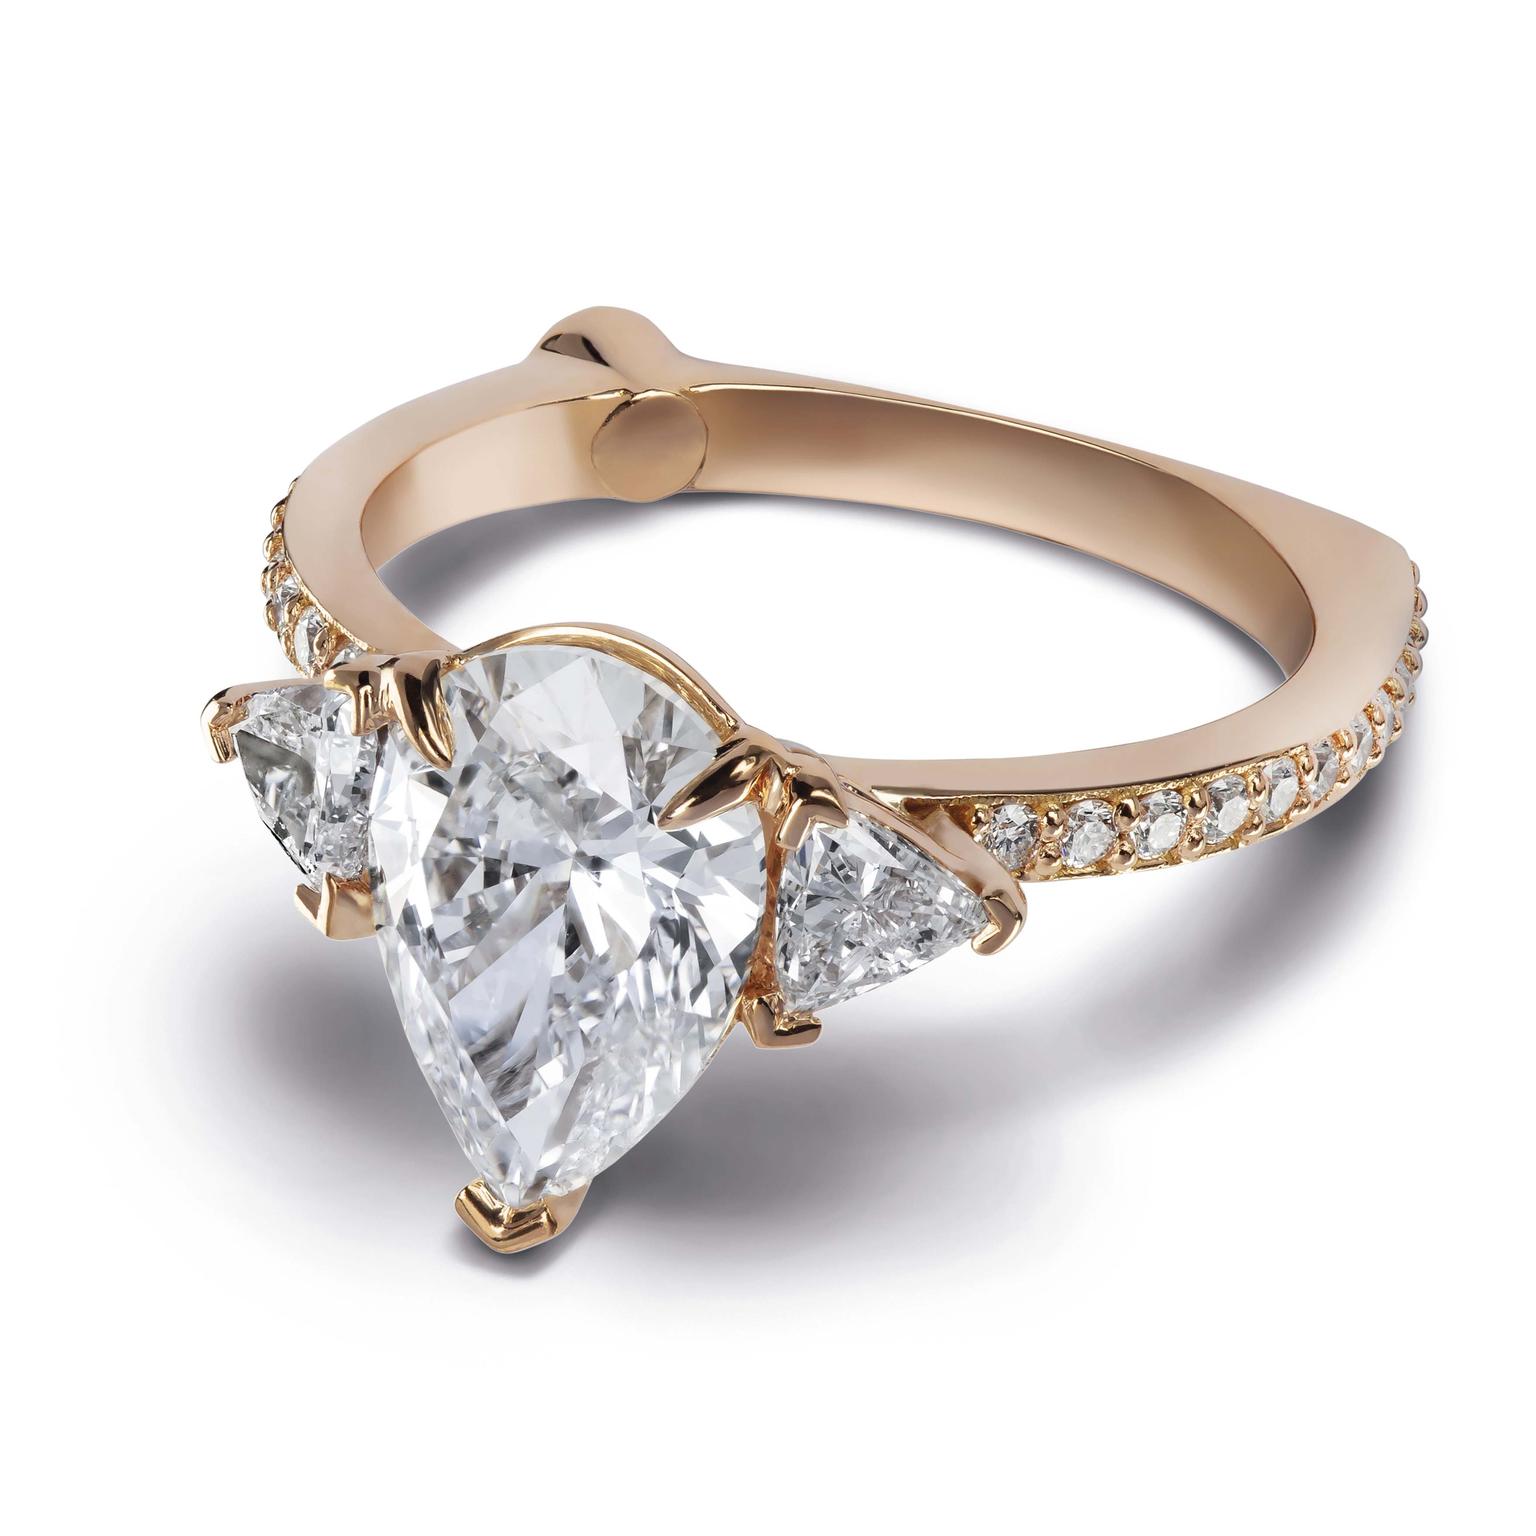 The Diamond Foundry Alessa Jewelry ring